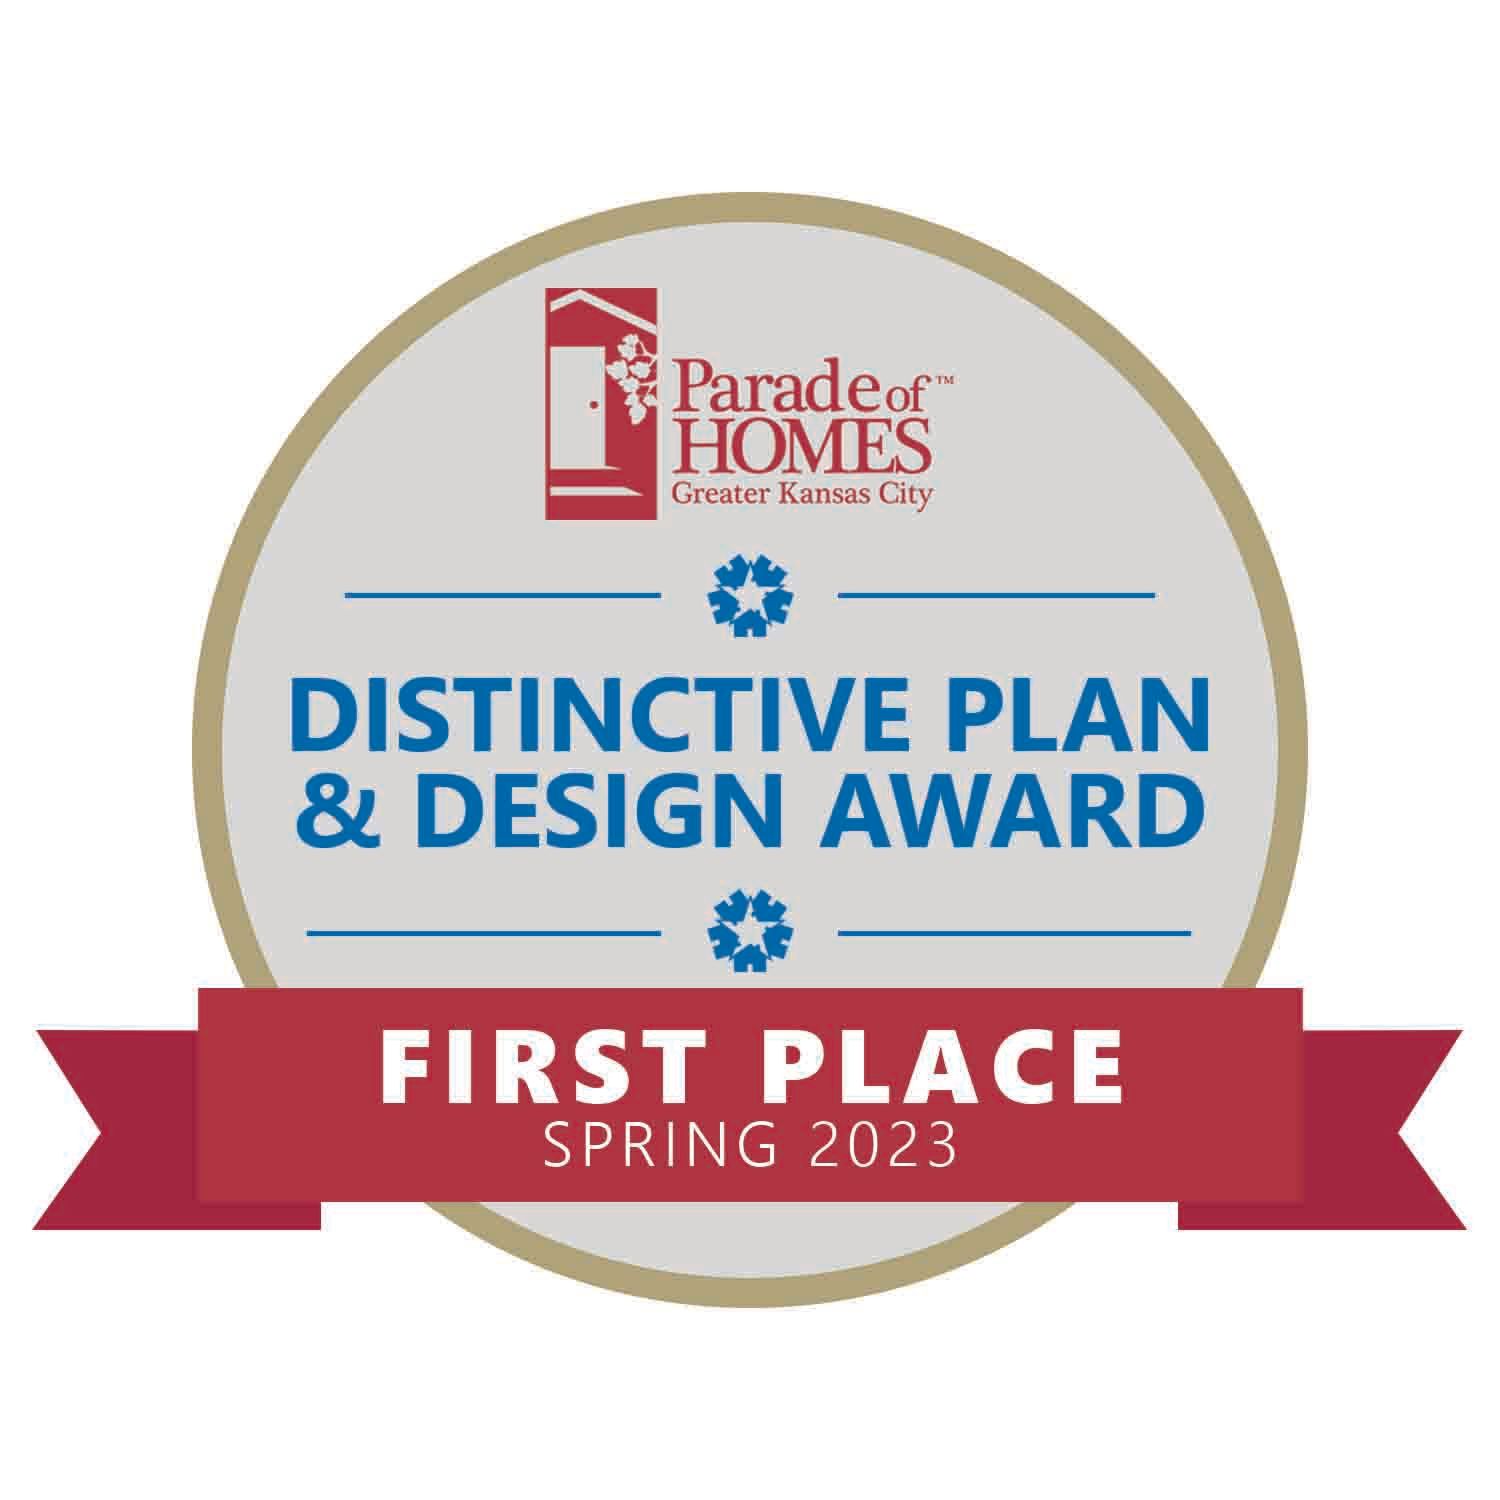 1st place in Distinctive Plan & Design